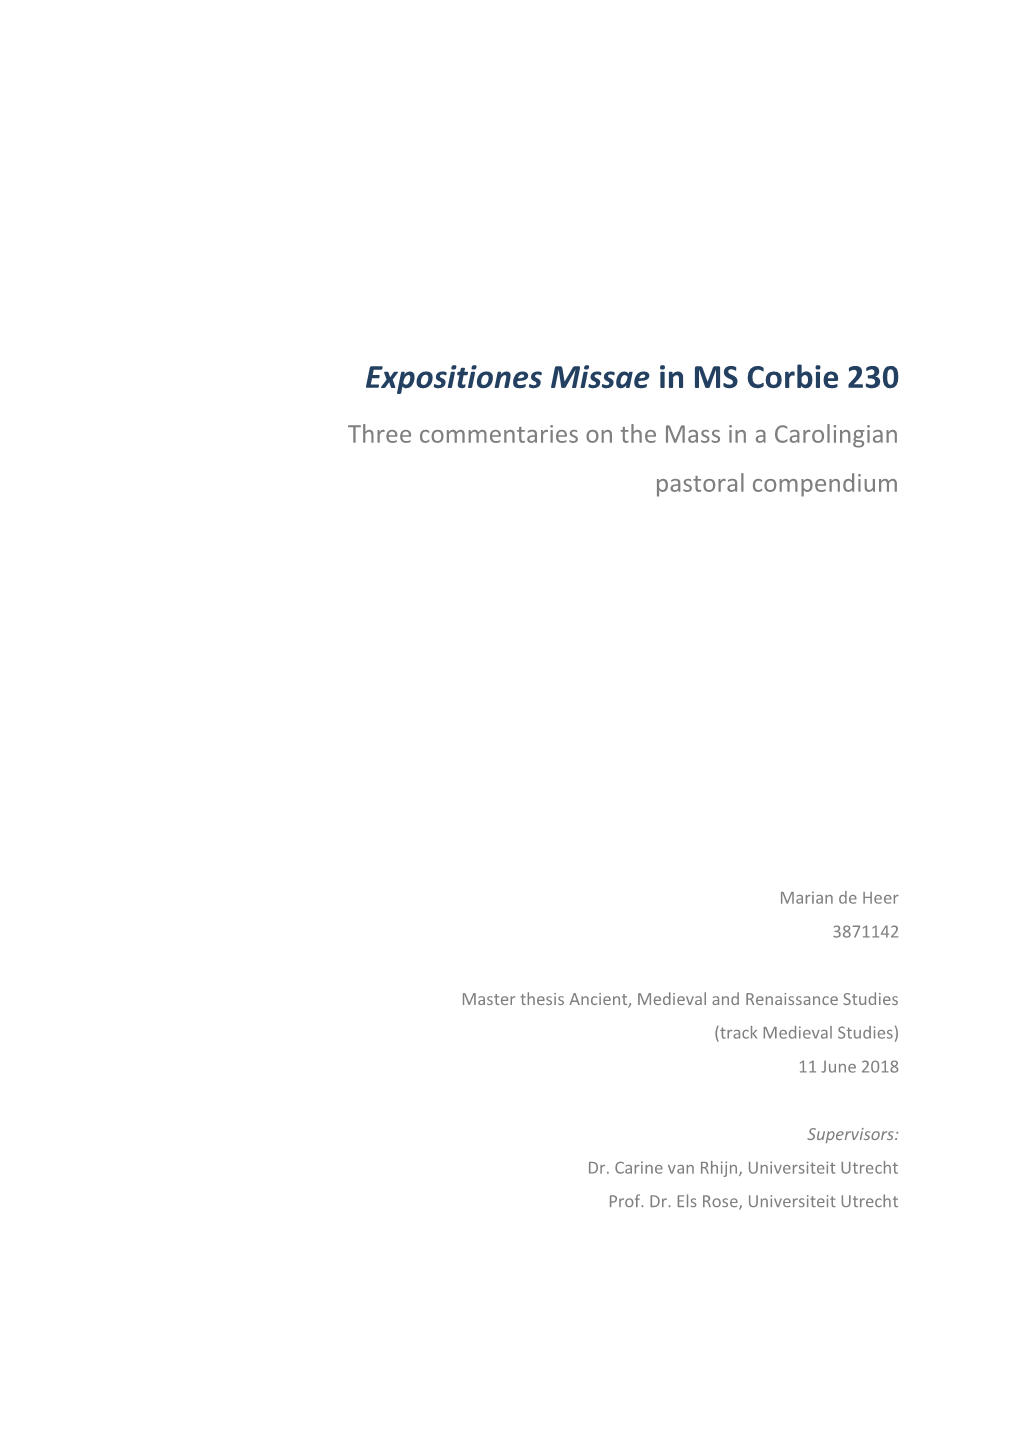 Expositiones Missae in MS Corbie 230 Three Commentaries on the Mass in a Carolingian Pastoral Compendium